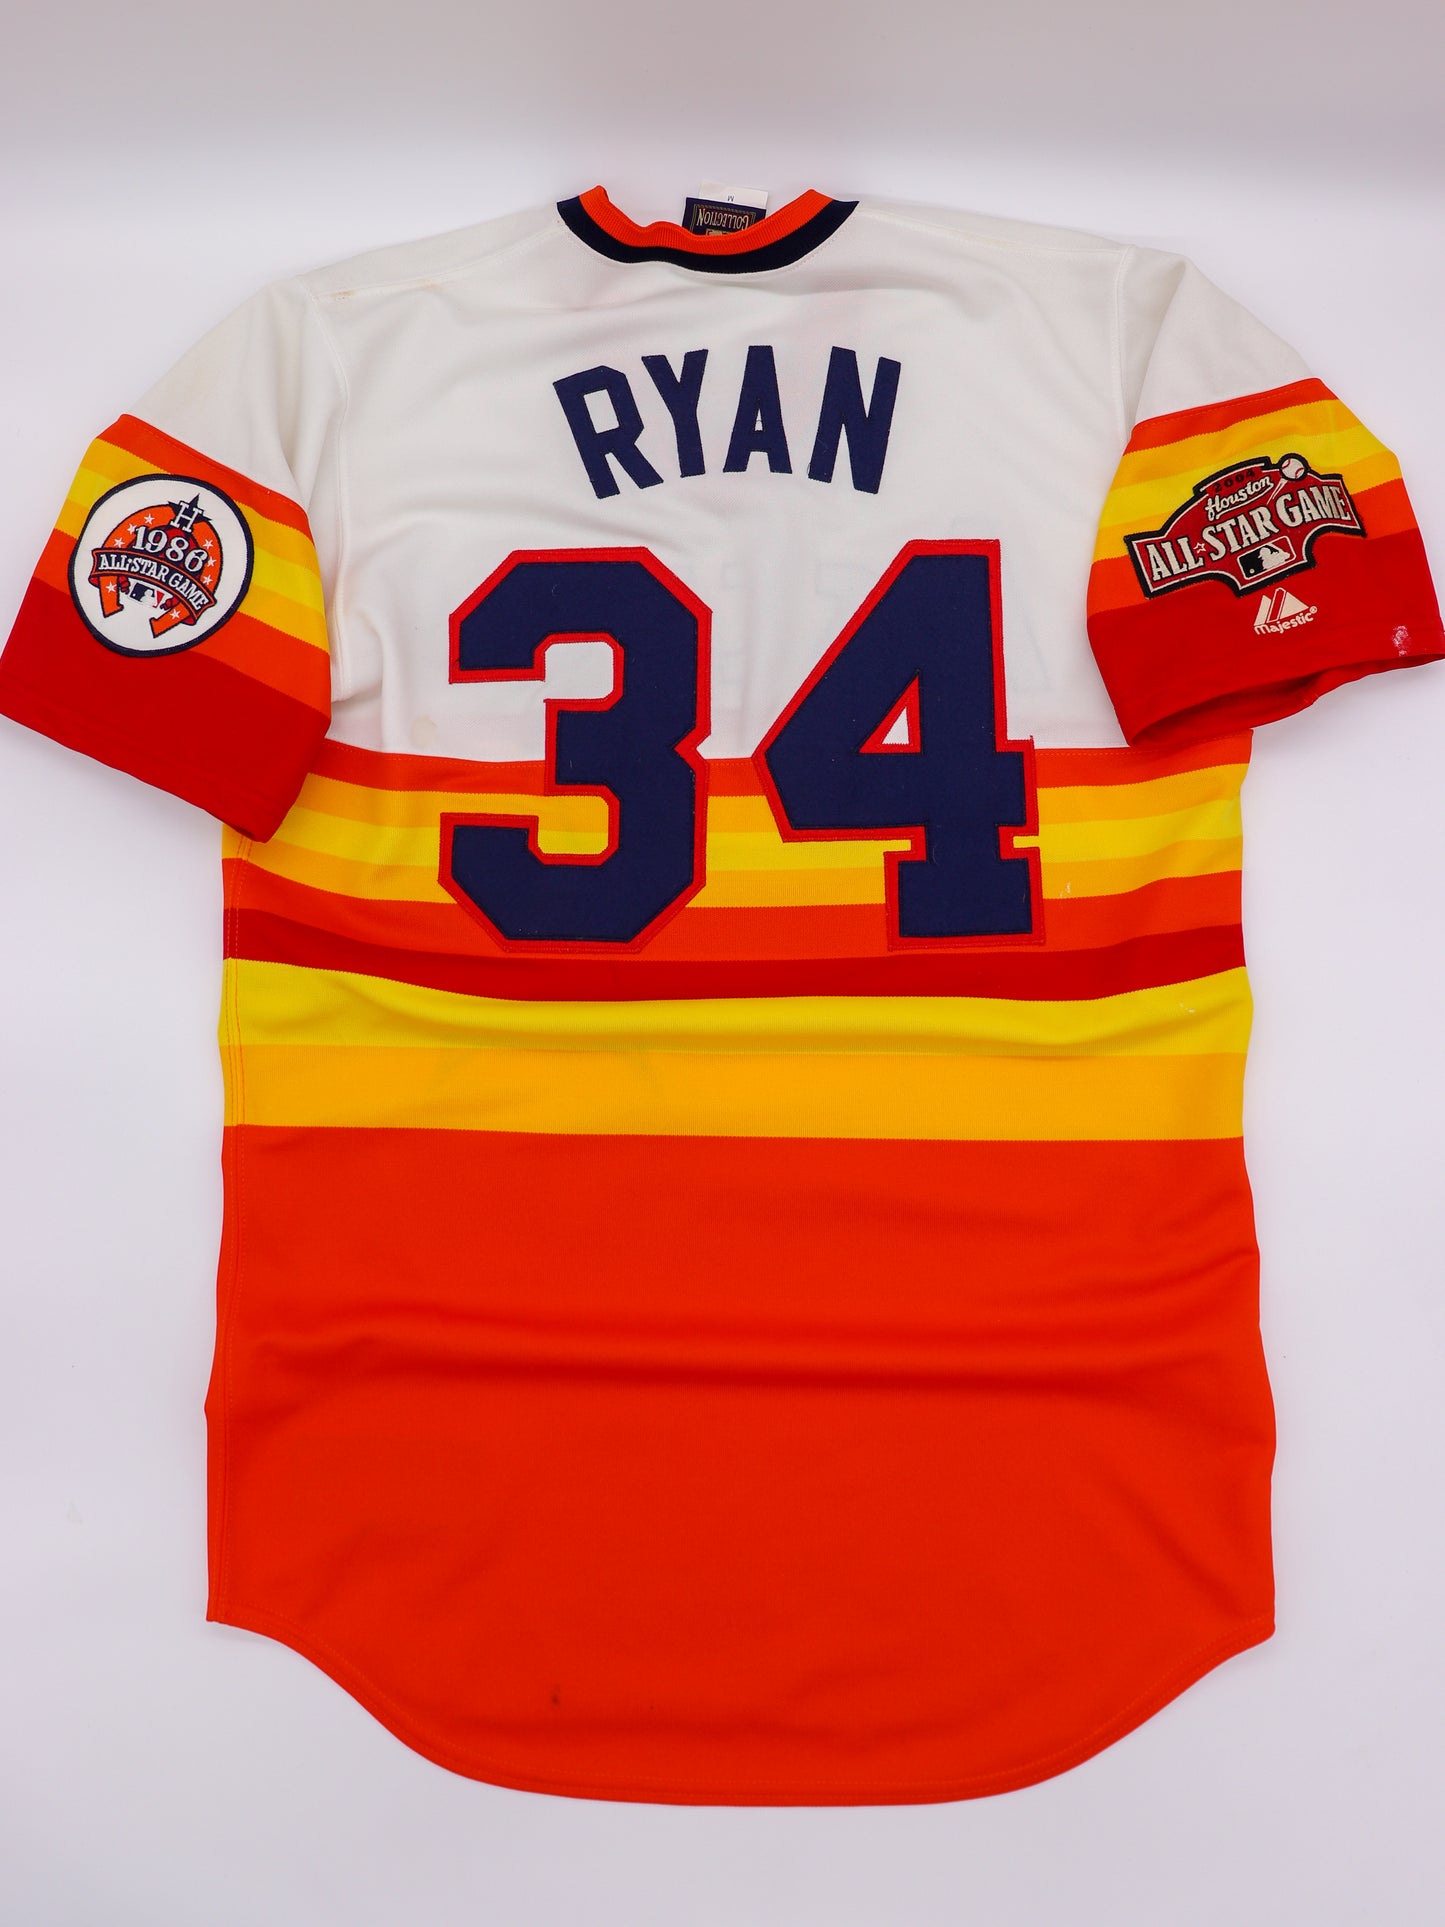 to Die for Collectibles 1986 Houston Astros #34 Nolan Ryan Orange “Rainbow” Jersey, Size M, Near Mint